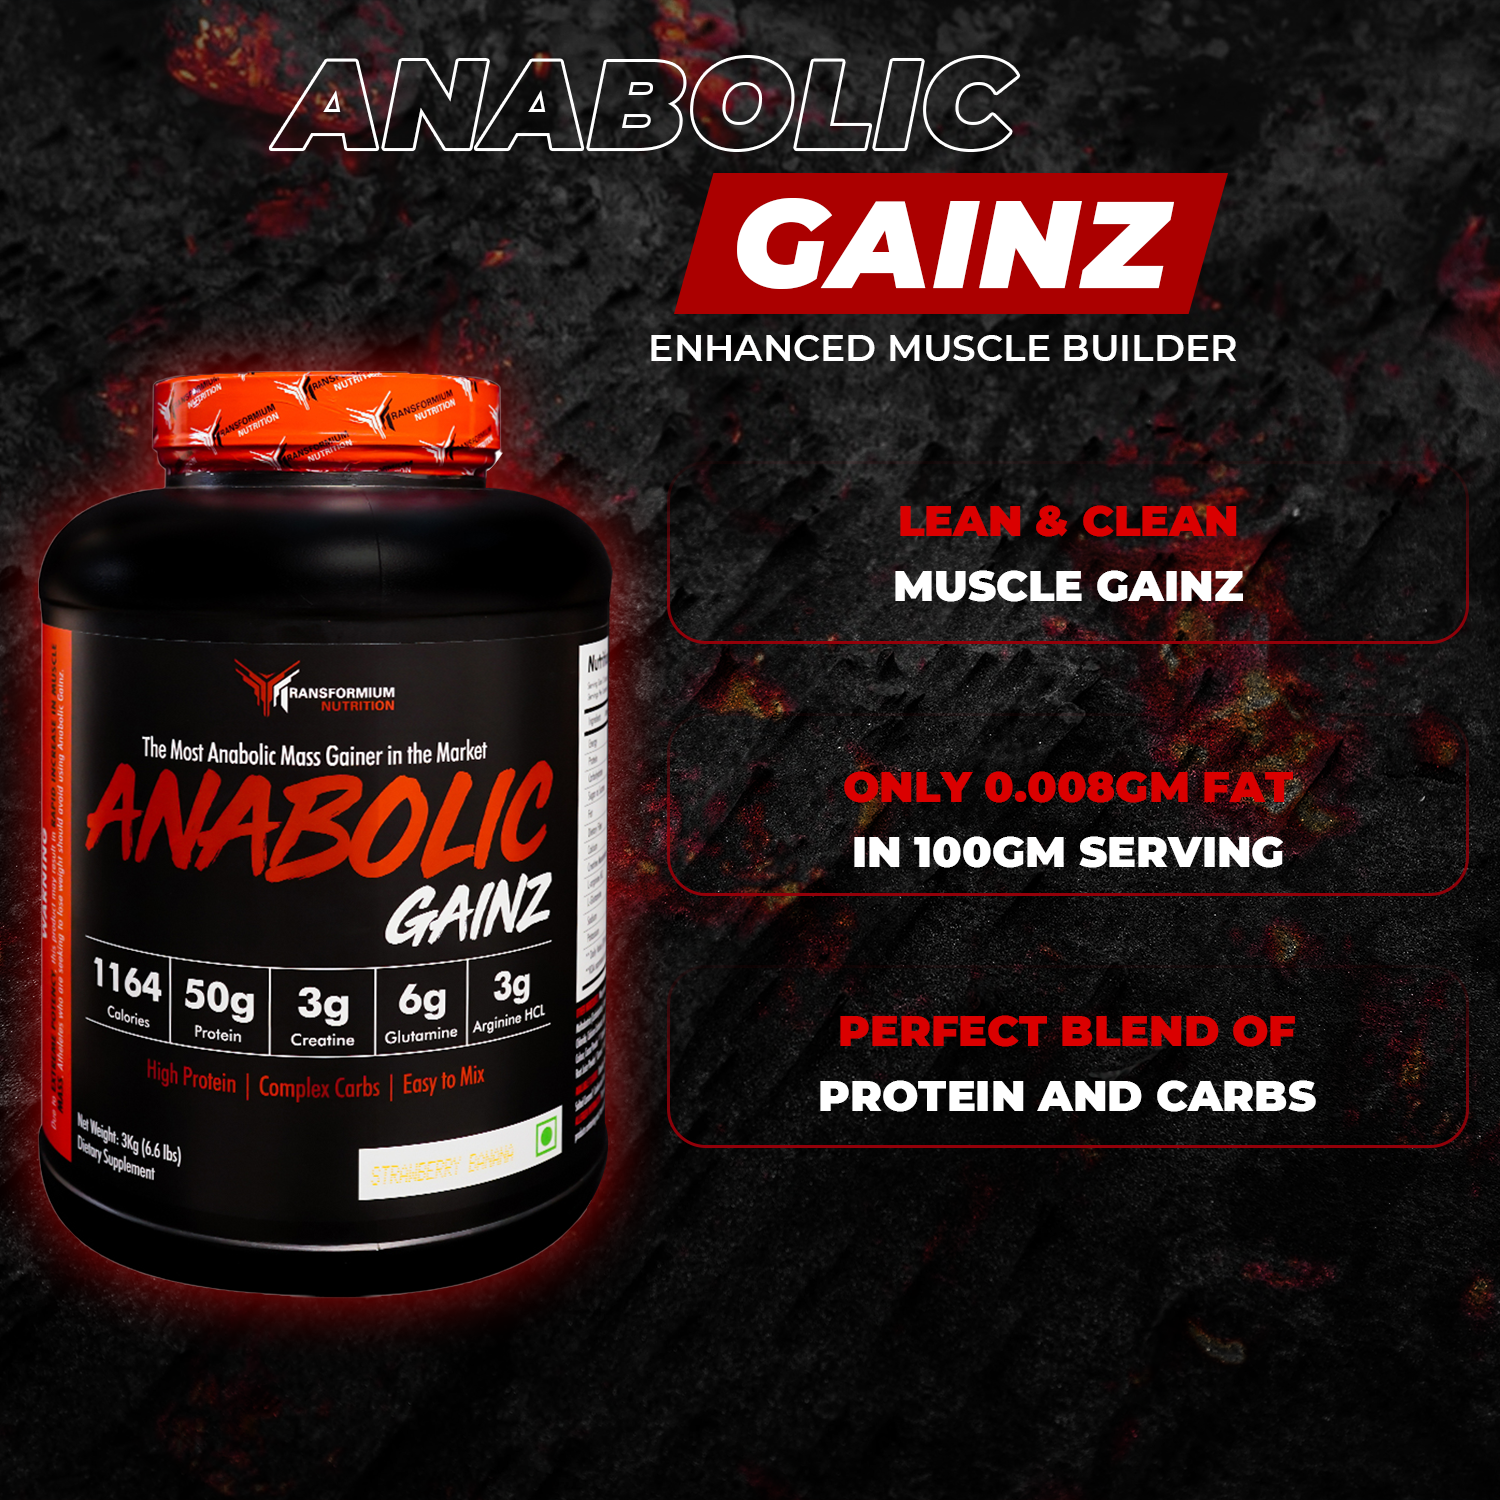 Anabolic Gainz (Enhanced Muscle Builder)